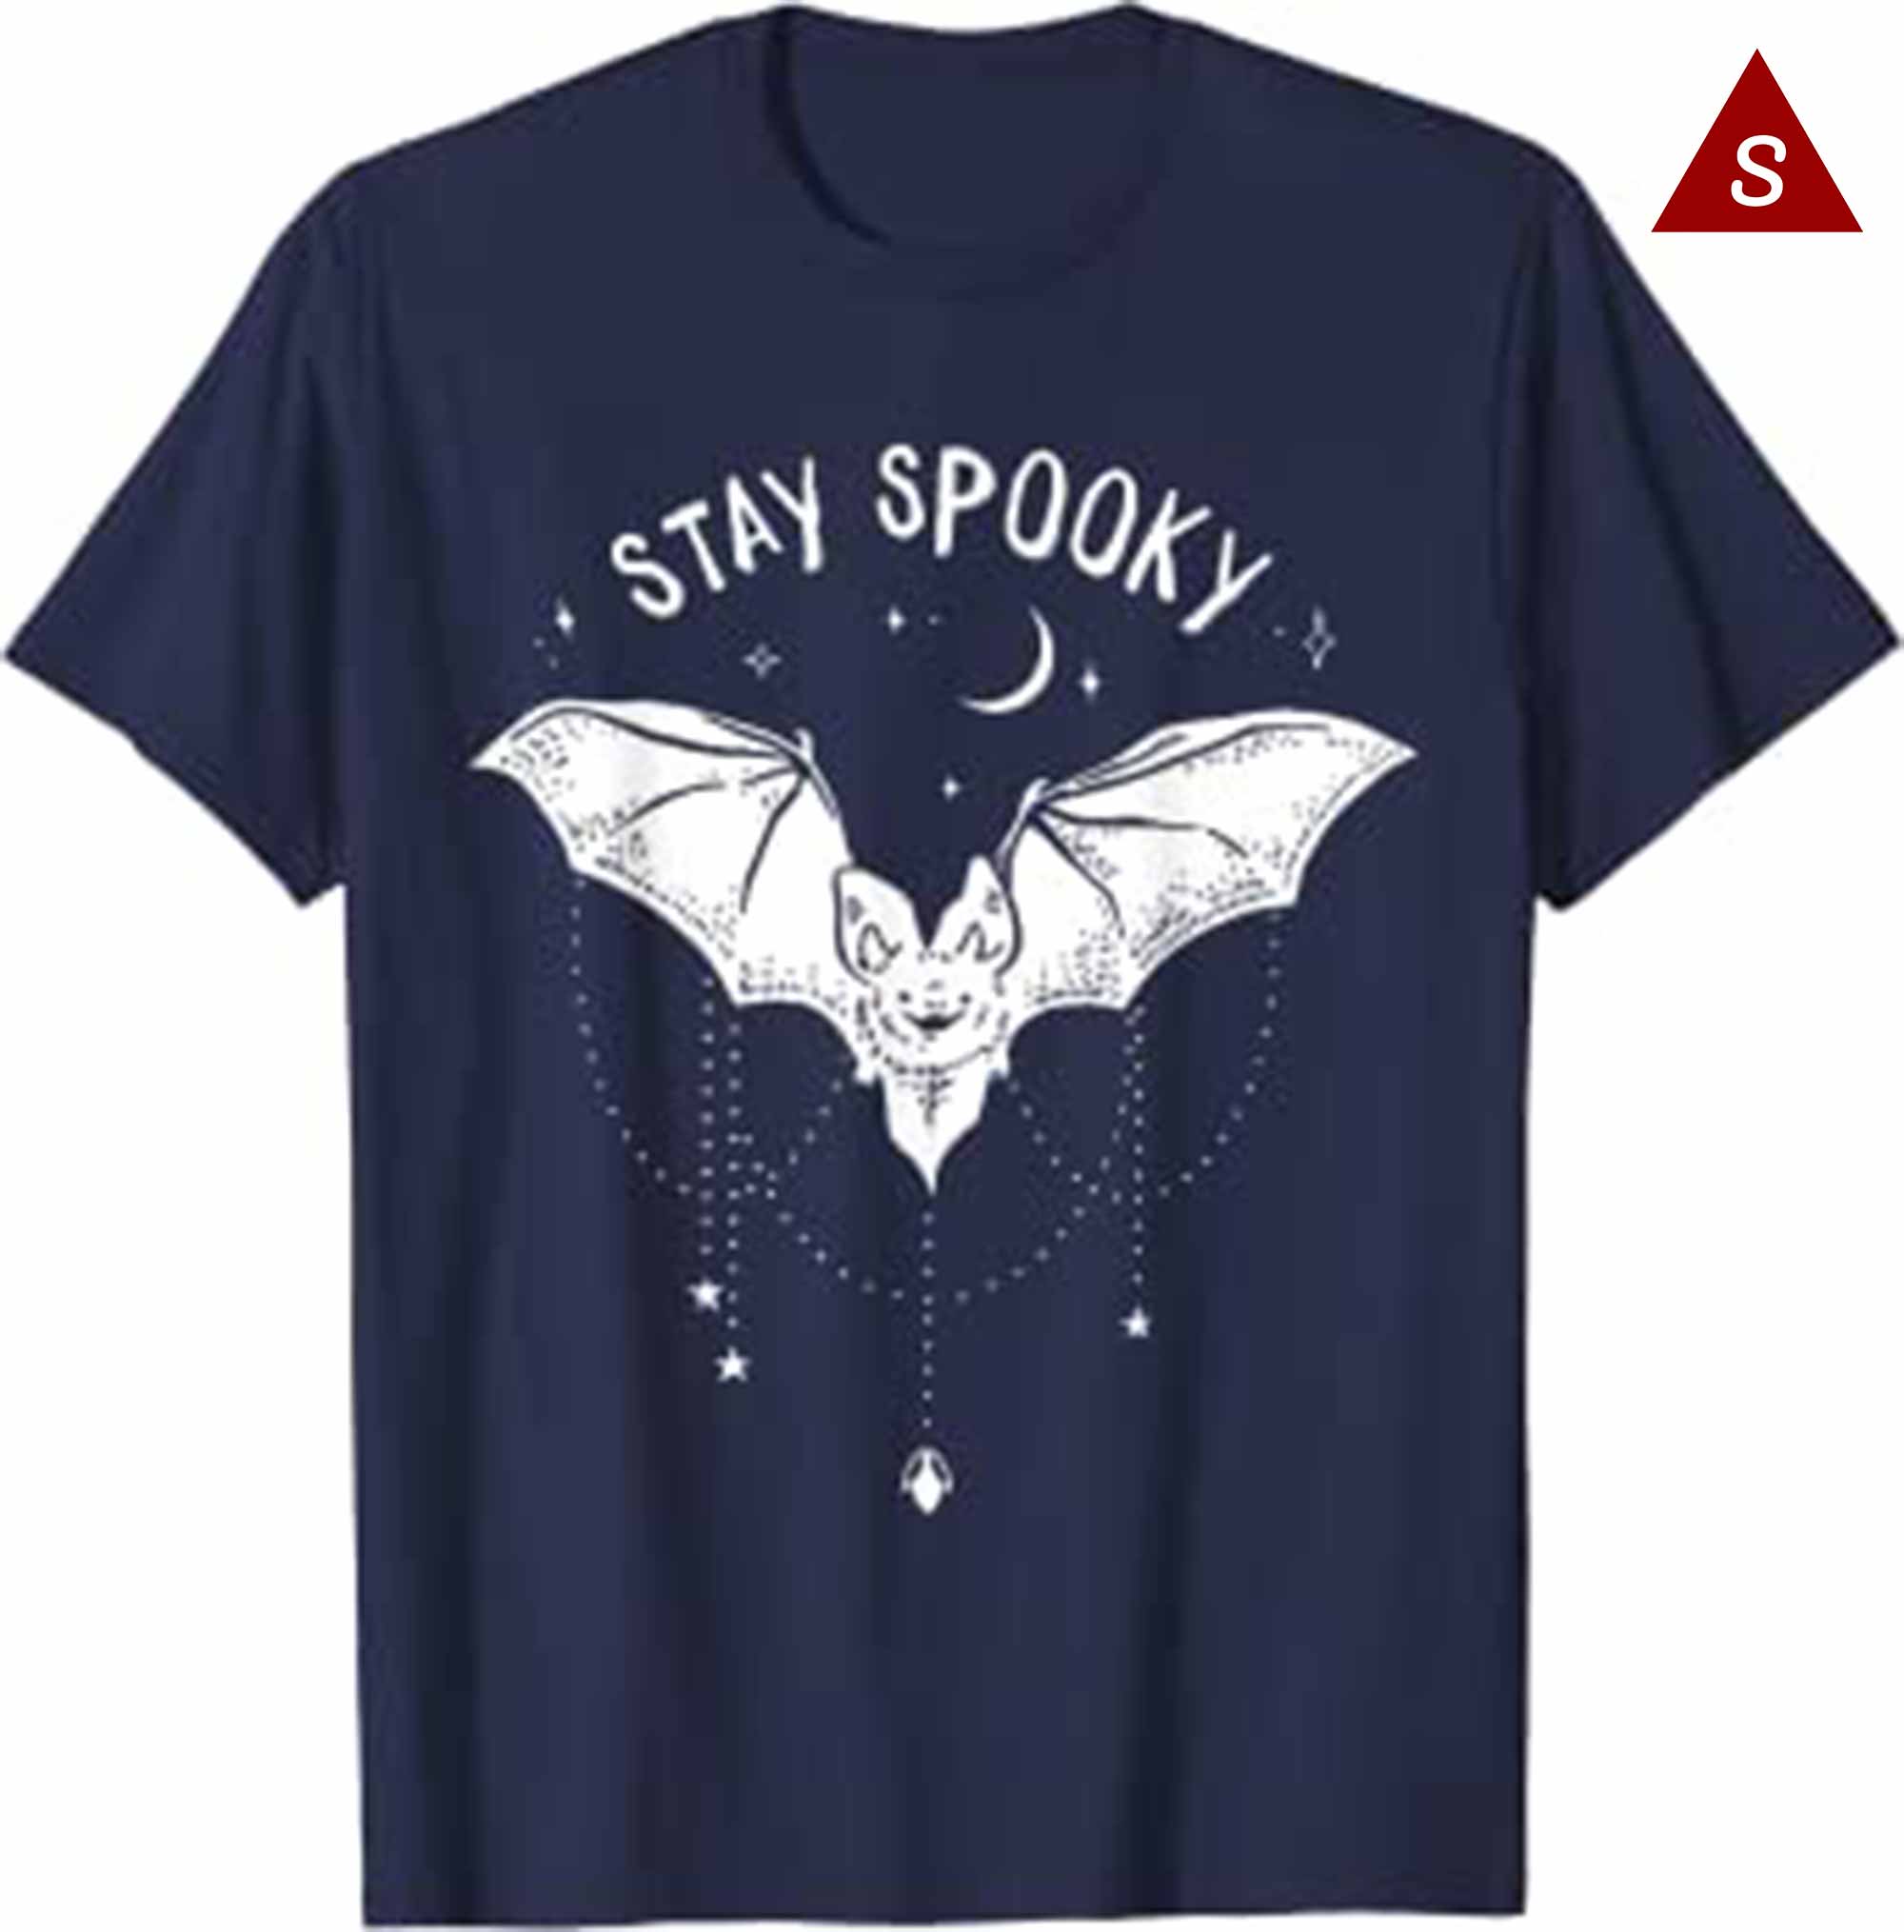 Skitongift Stay Spooky Cute Vampire Bat Halloween T Shirt